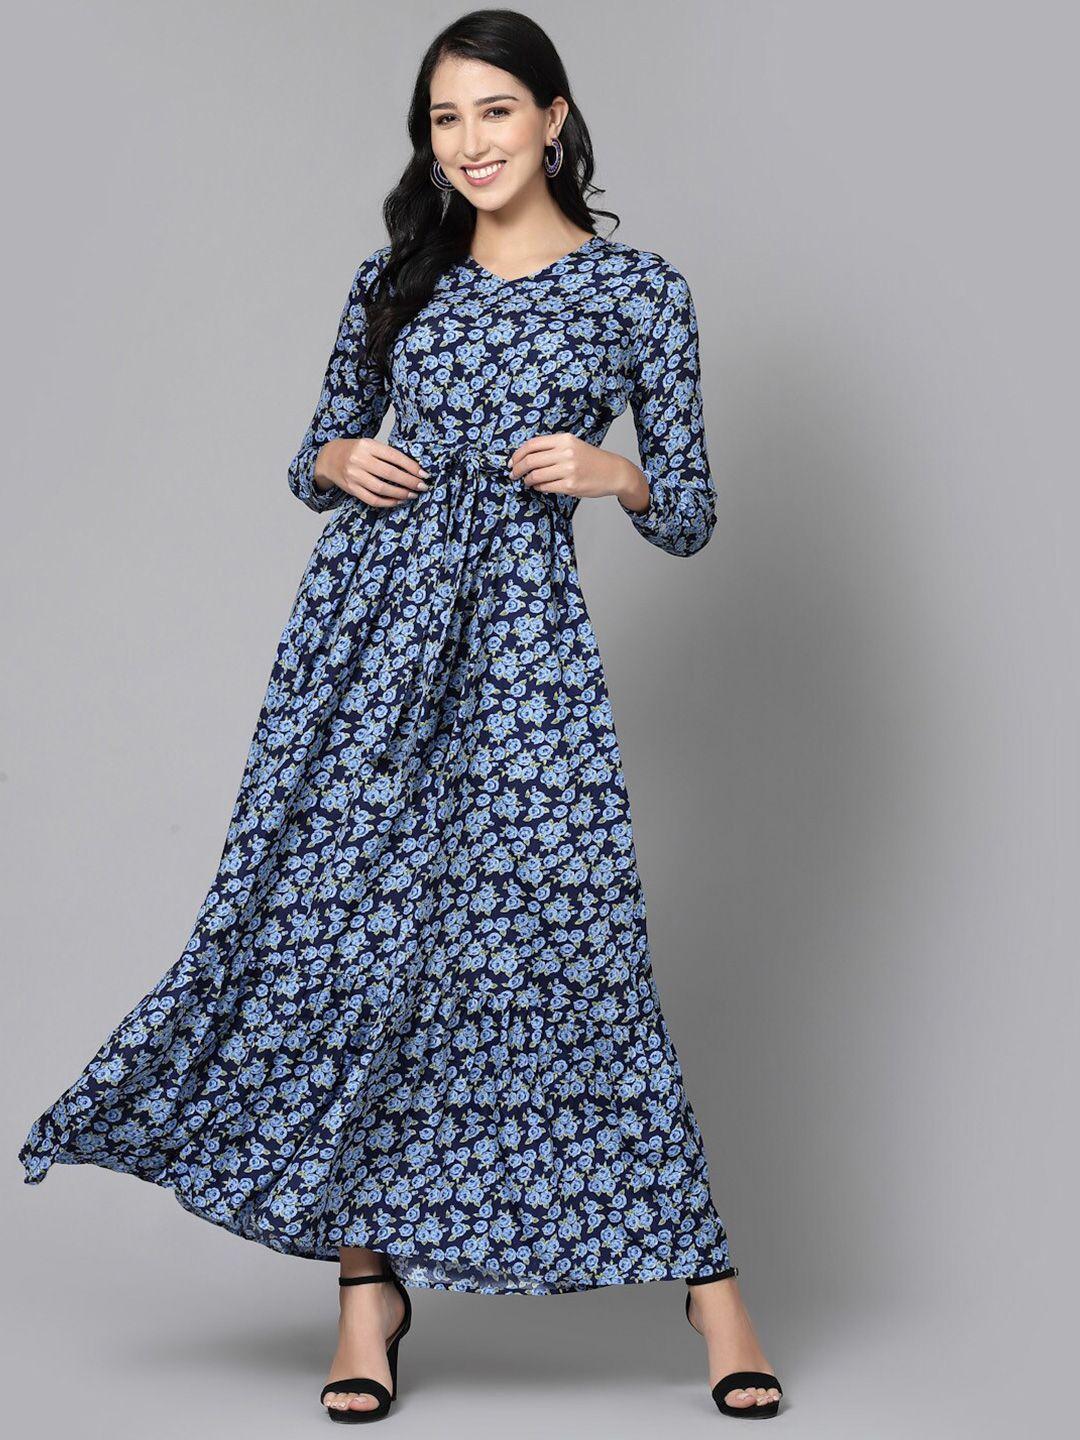 aayu floral printed v-neck maxi dress